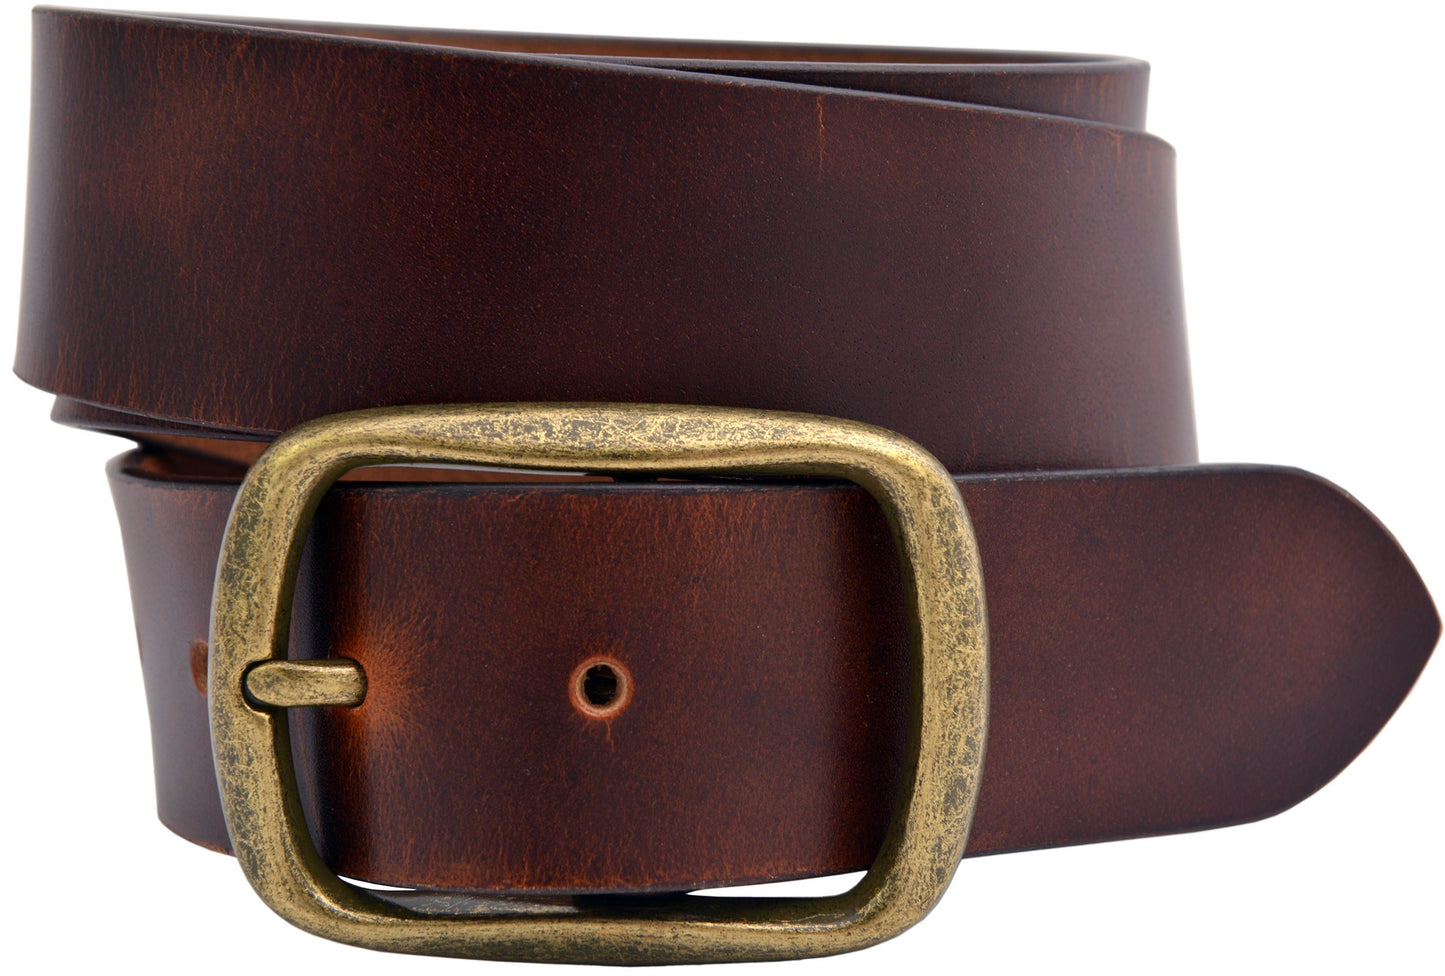 Full Grain Buffalo Leather Aniline Finish Belt - Reddish Brown - TBS3305-750